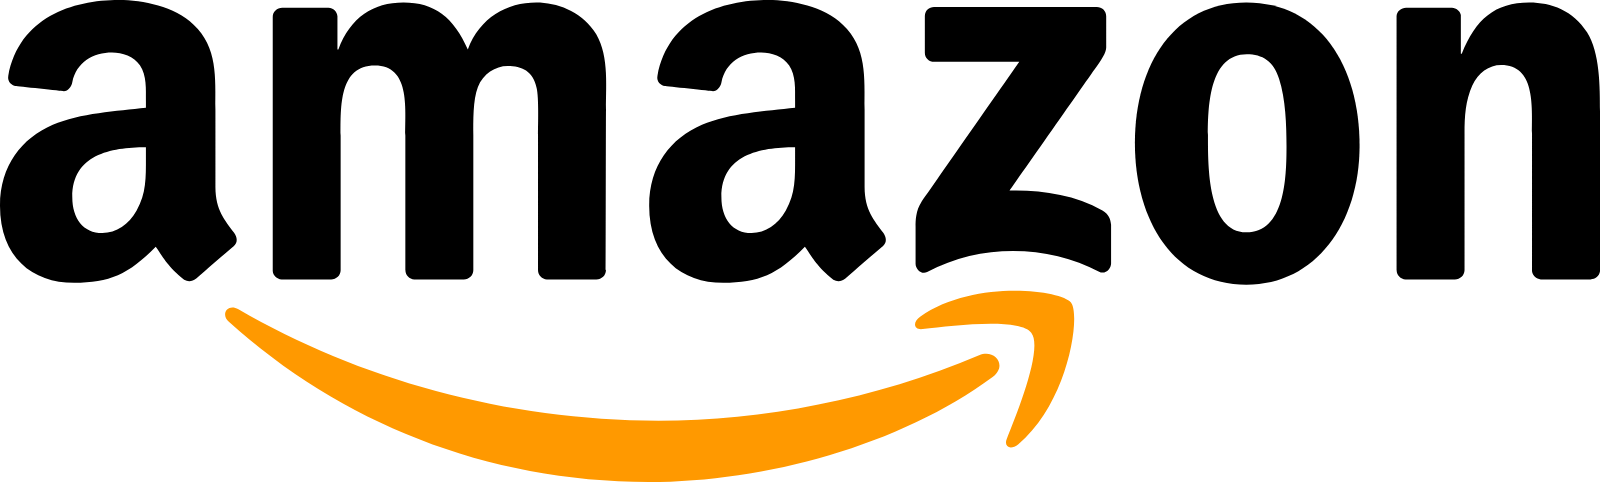 Amazon it companies in New York